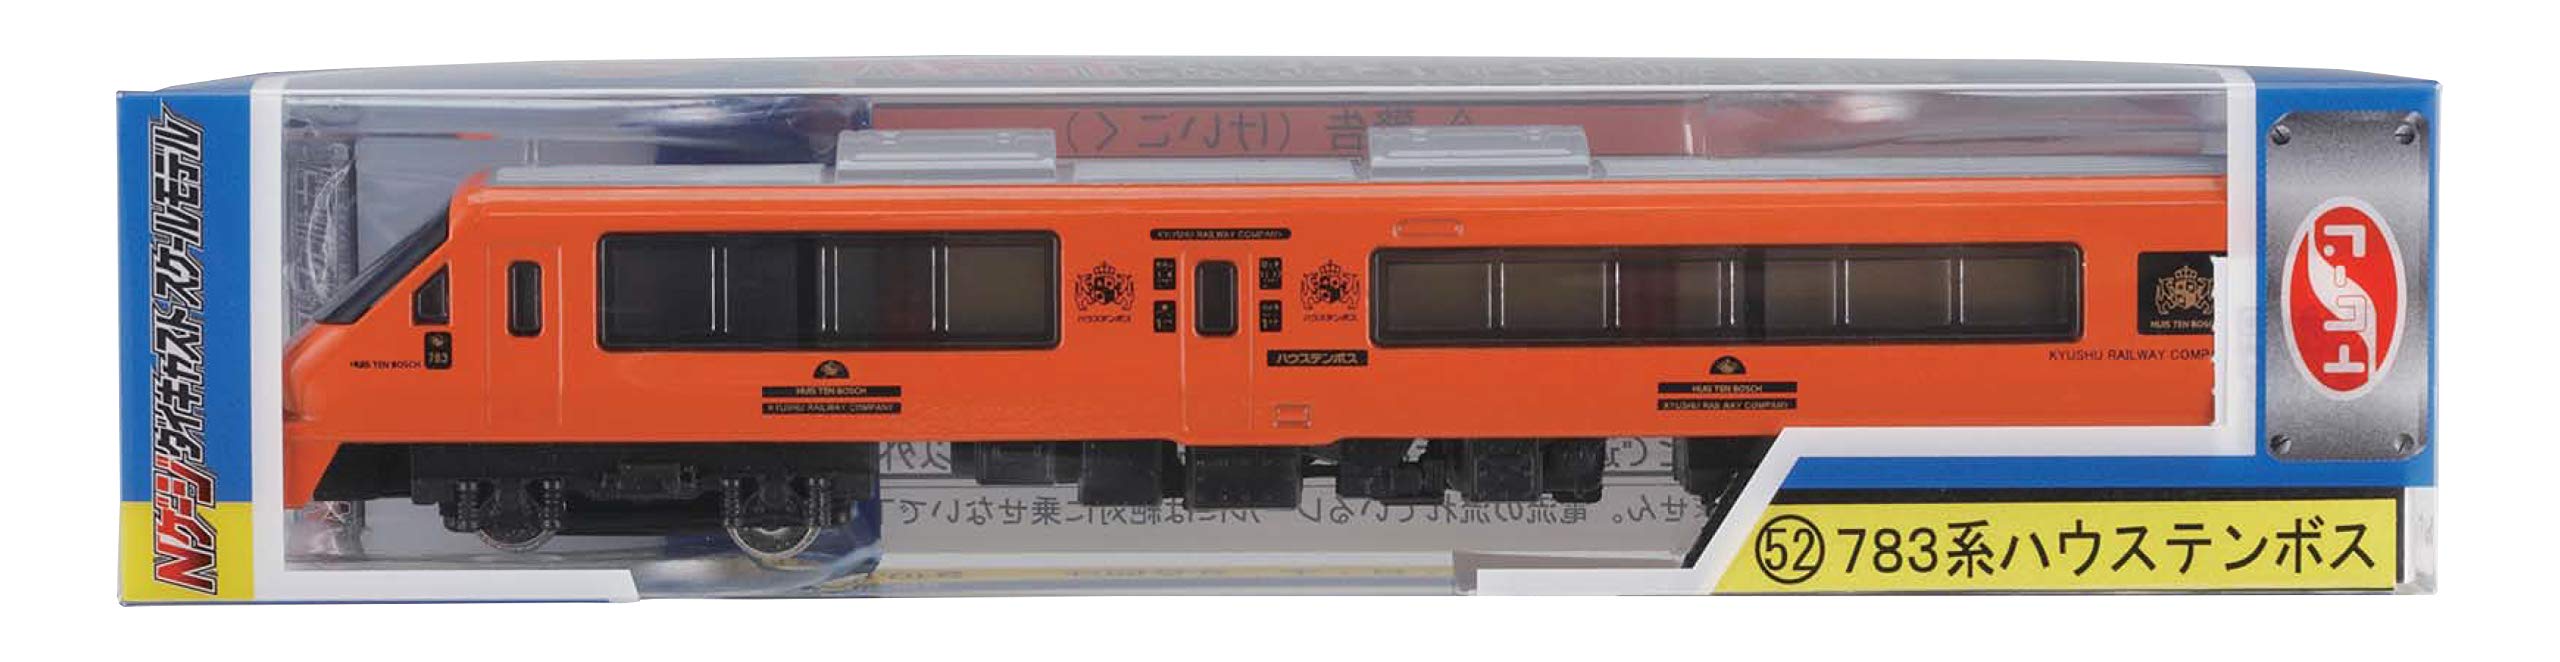 N gauge die-cast scale model No.52 Limited Express Huis Ten Bosch Orange NEW_2